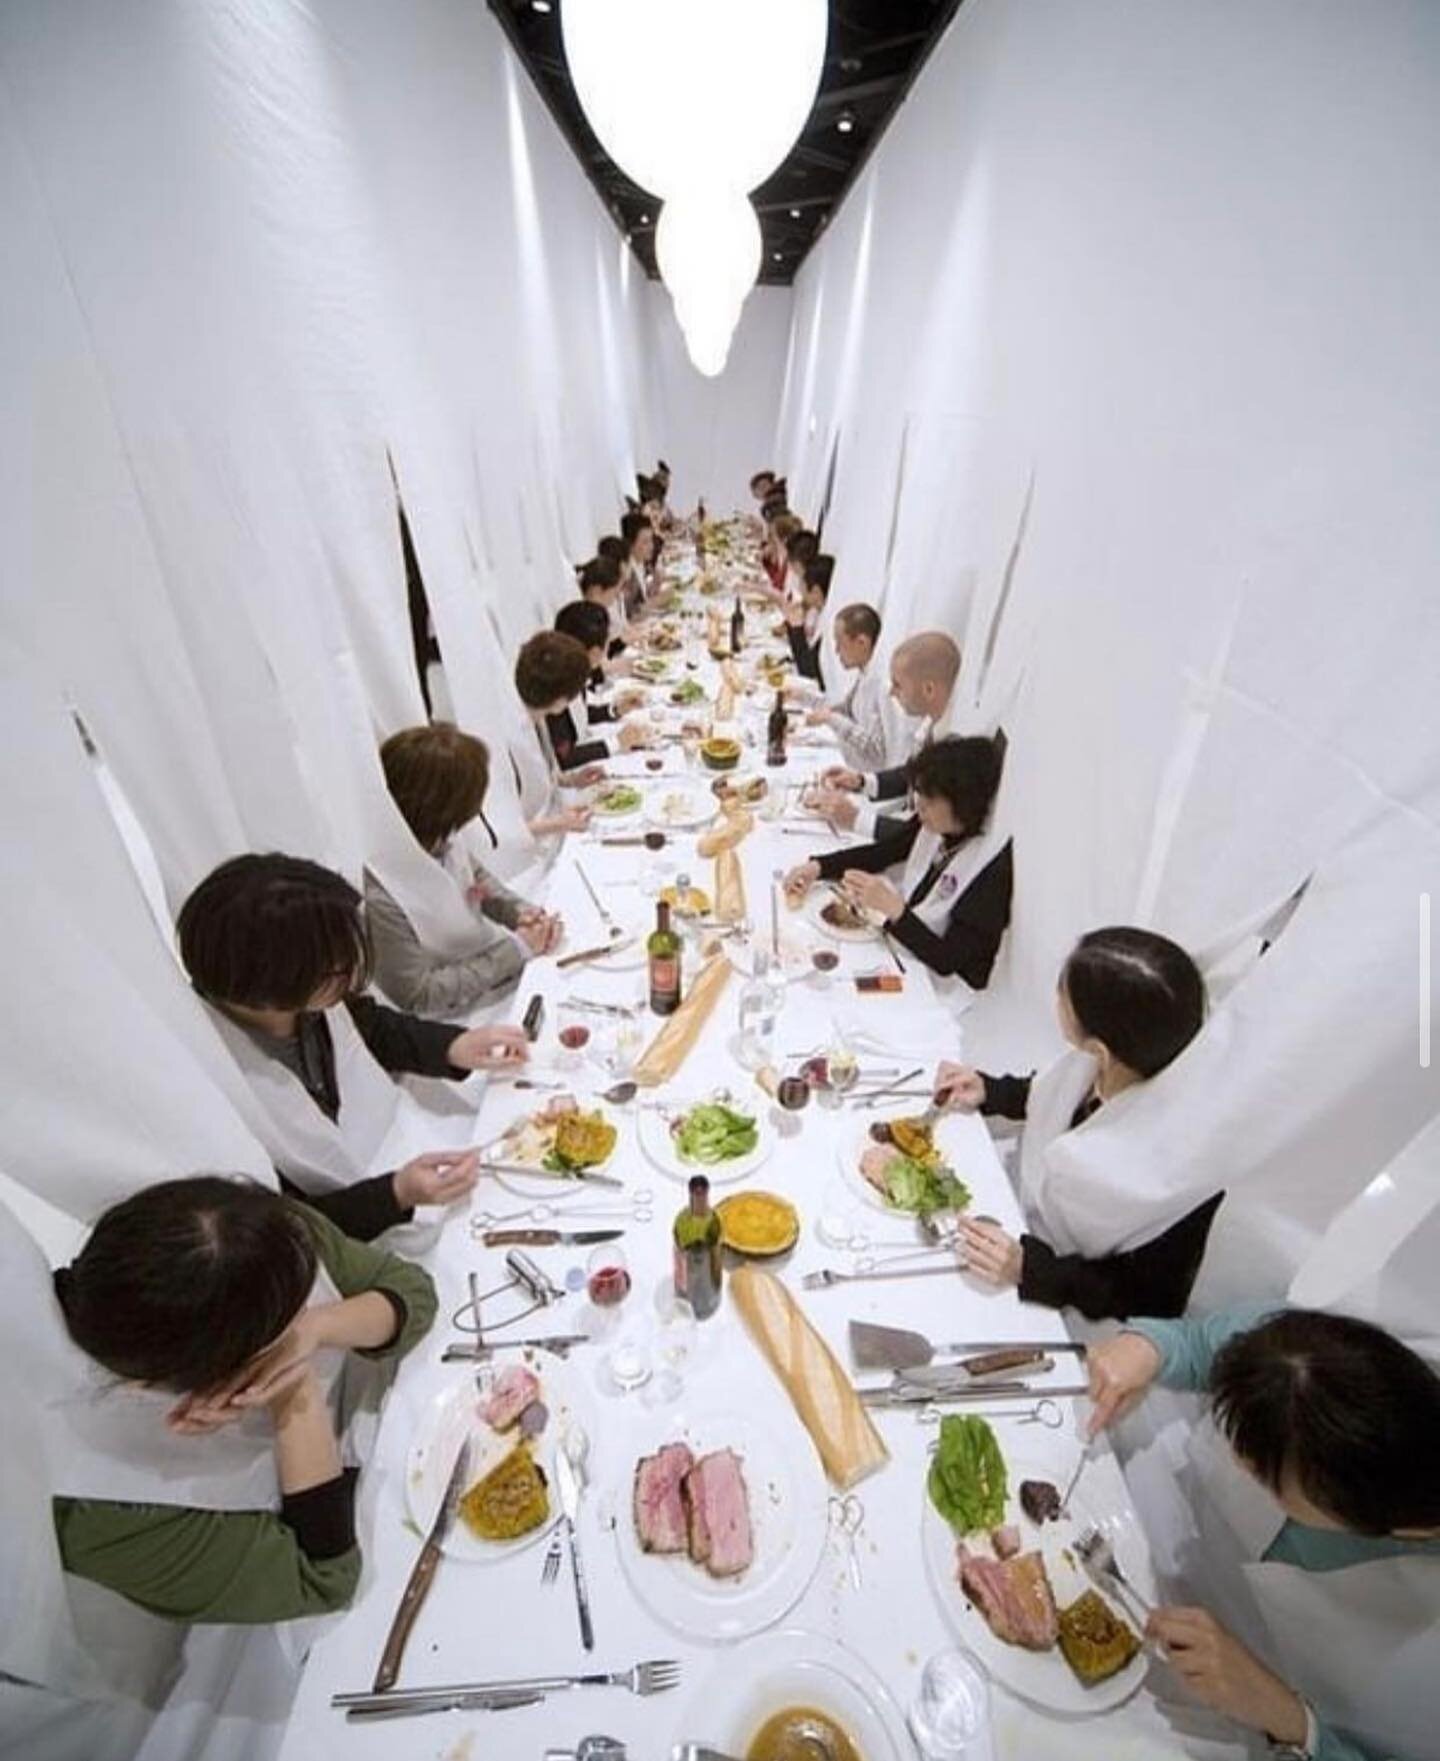 &ldquo;Sharing dinner&rdquo; a social experiment by Marije Vogelzang (2011). 

#marijevogelzang